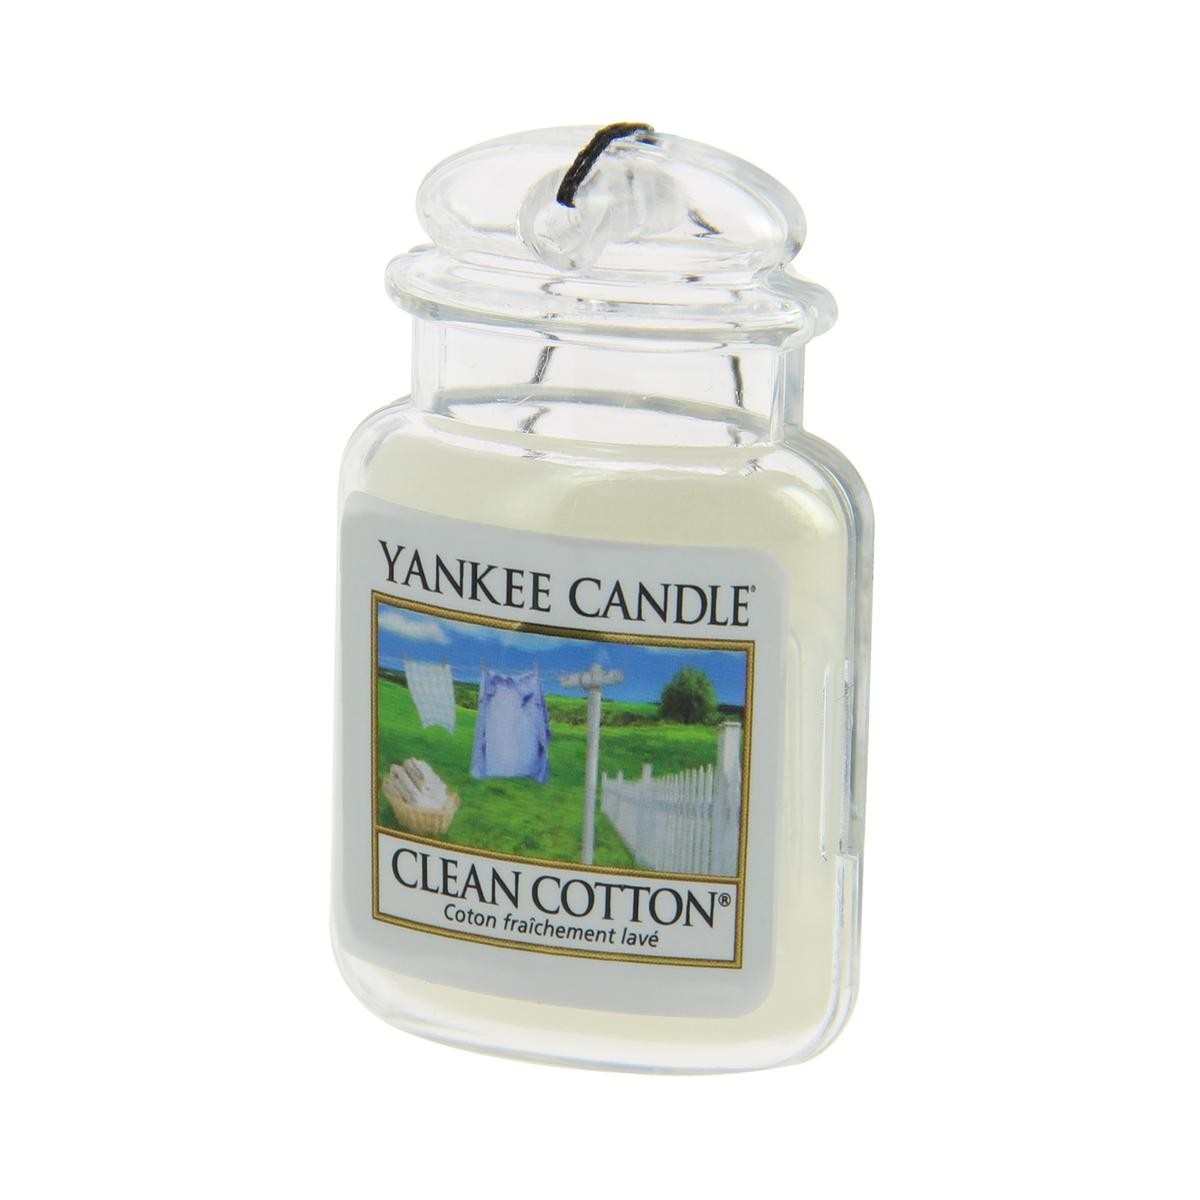 Yankee Candle Autoduft Car Jar Ultimate Clean Cotton